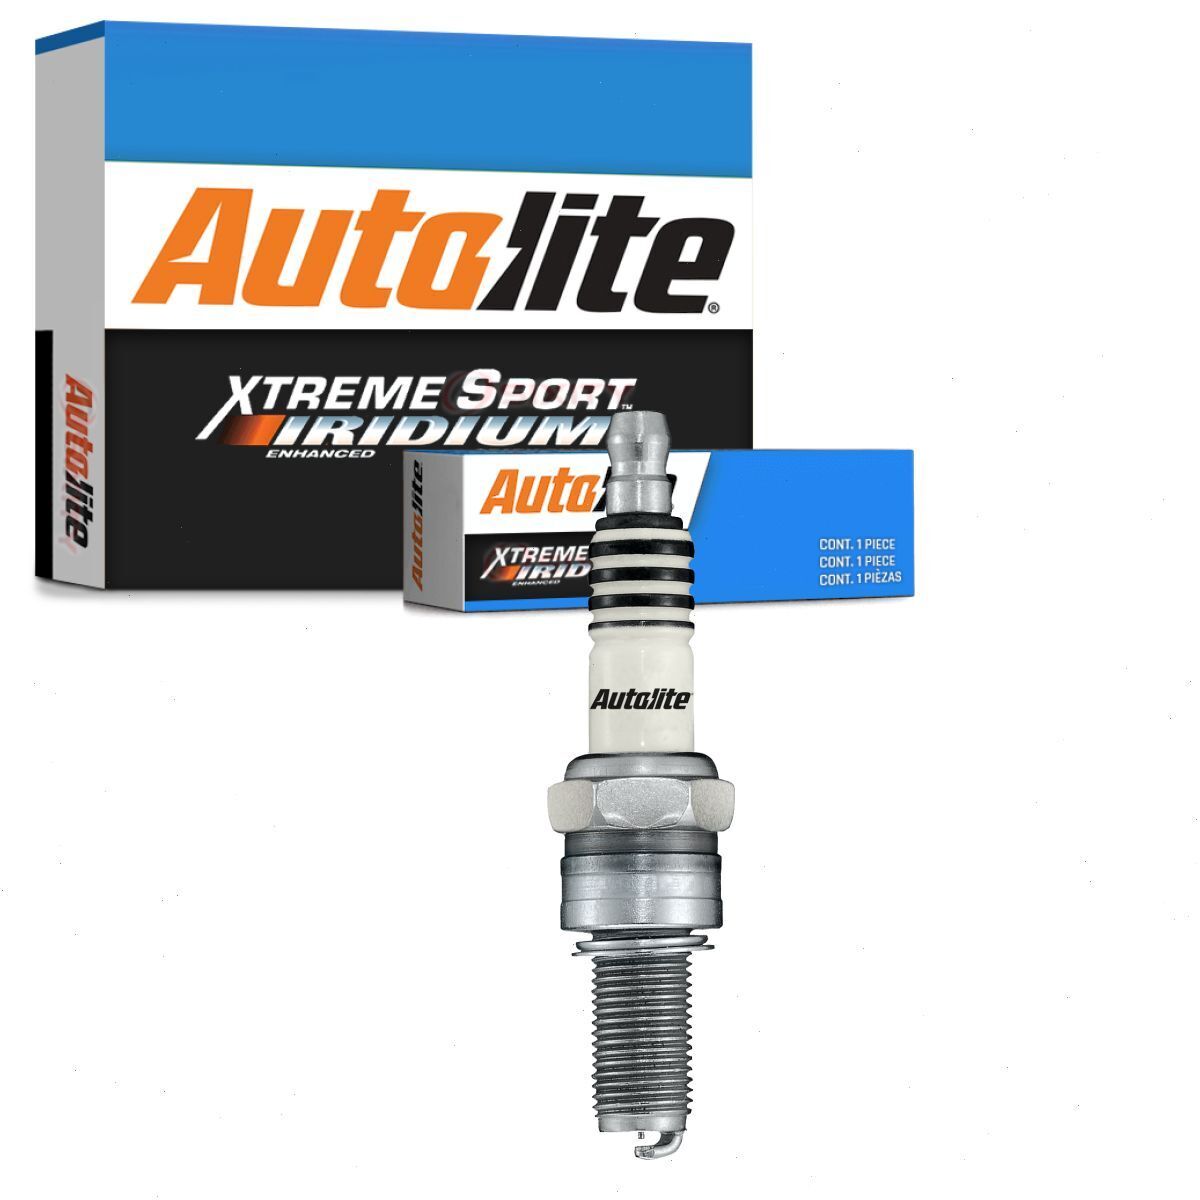 Autolite Xtreme Sport XS4302 Spark Plug for CR43TS ASF42C 653 4218 4155 2305 ik